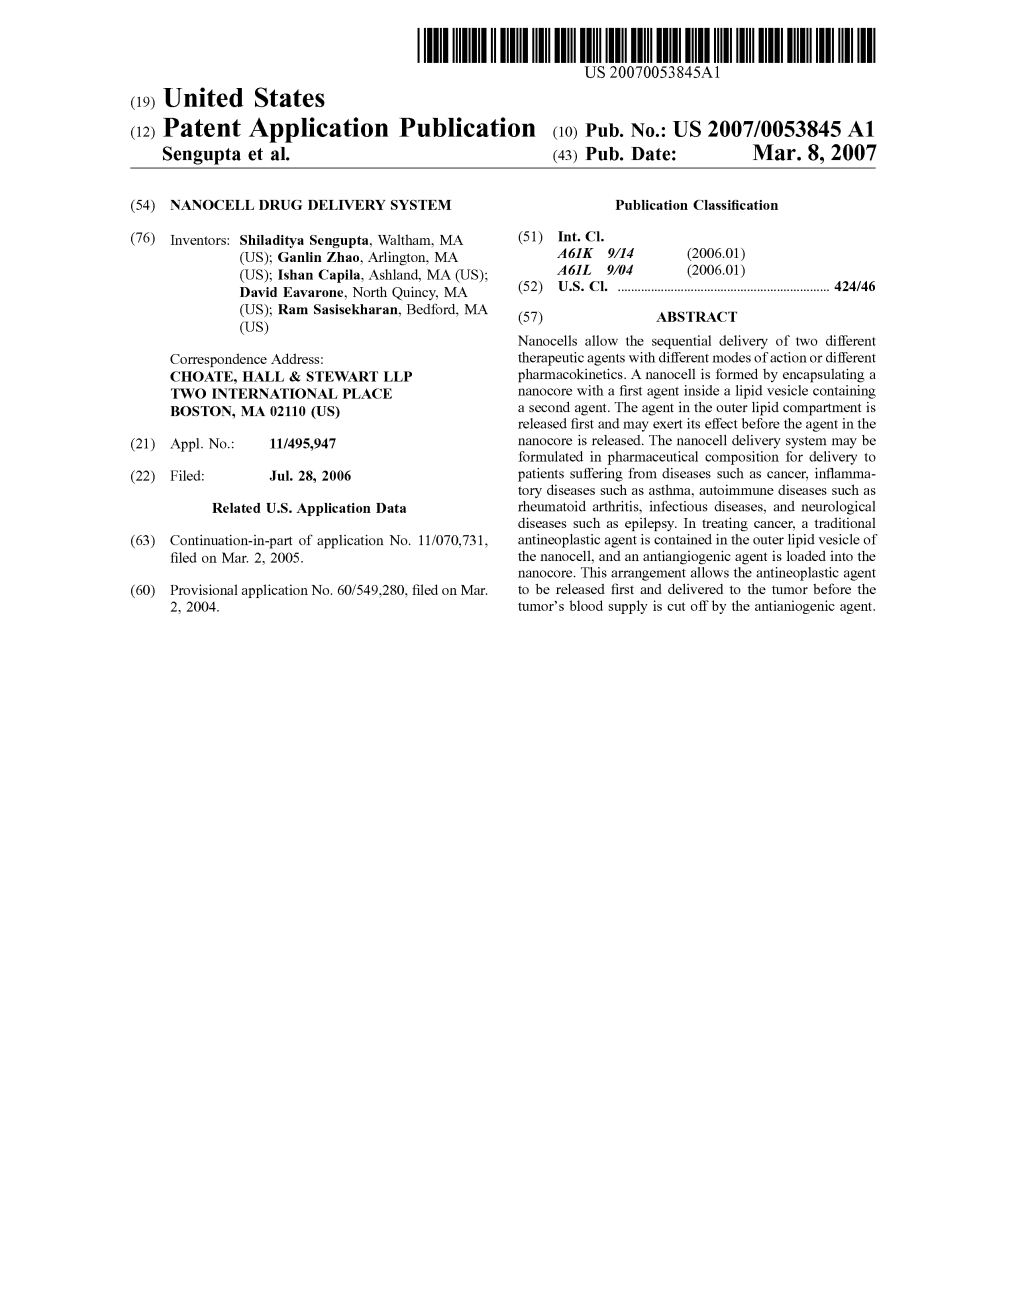 (12) Patent Application Publication (10) Pub. No.: US 2007/0053845 A1 Sengupta Et Al